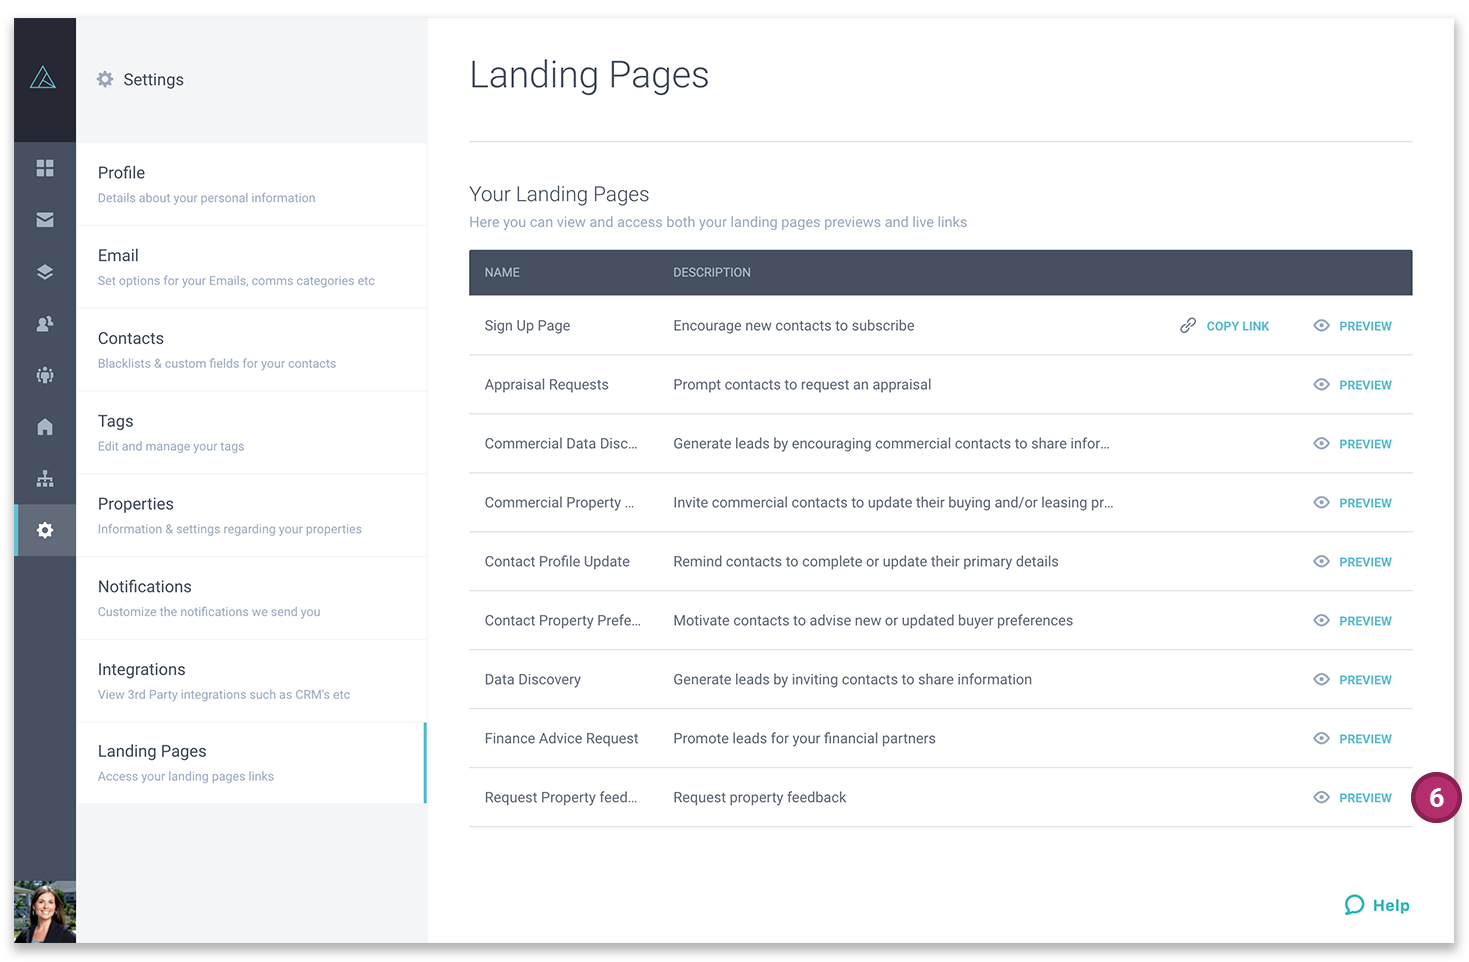 Settings_LandingPages_Feedback_copy.png